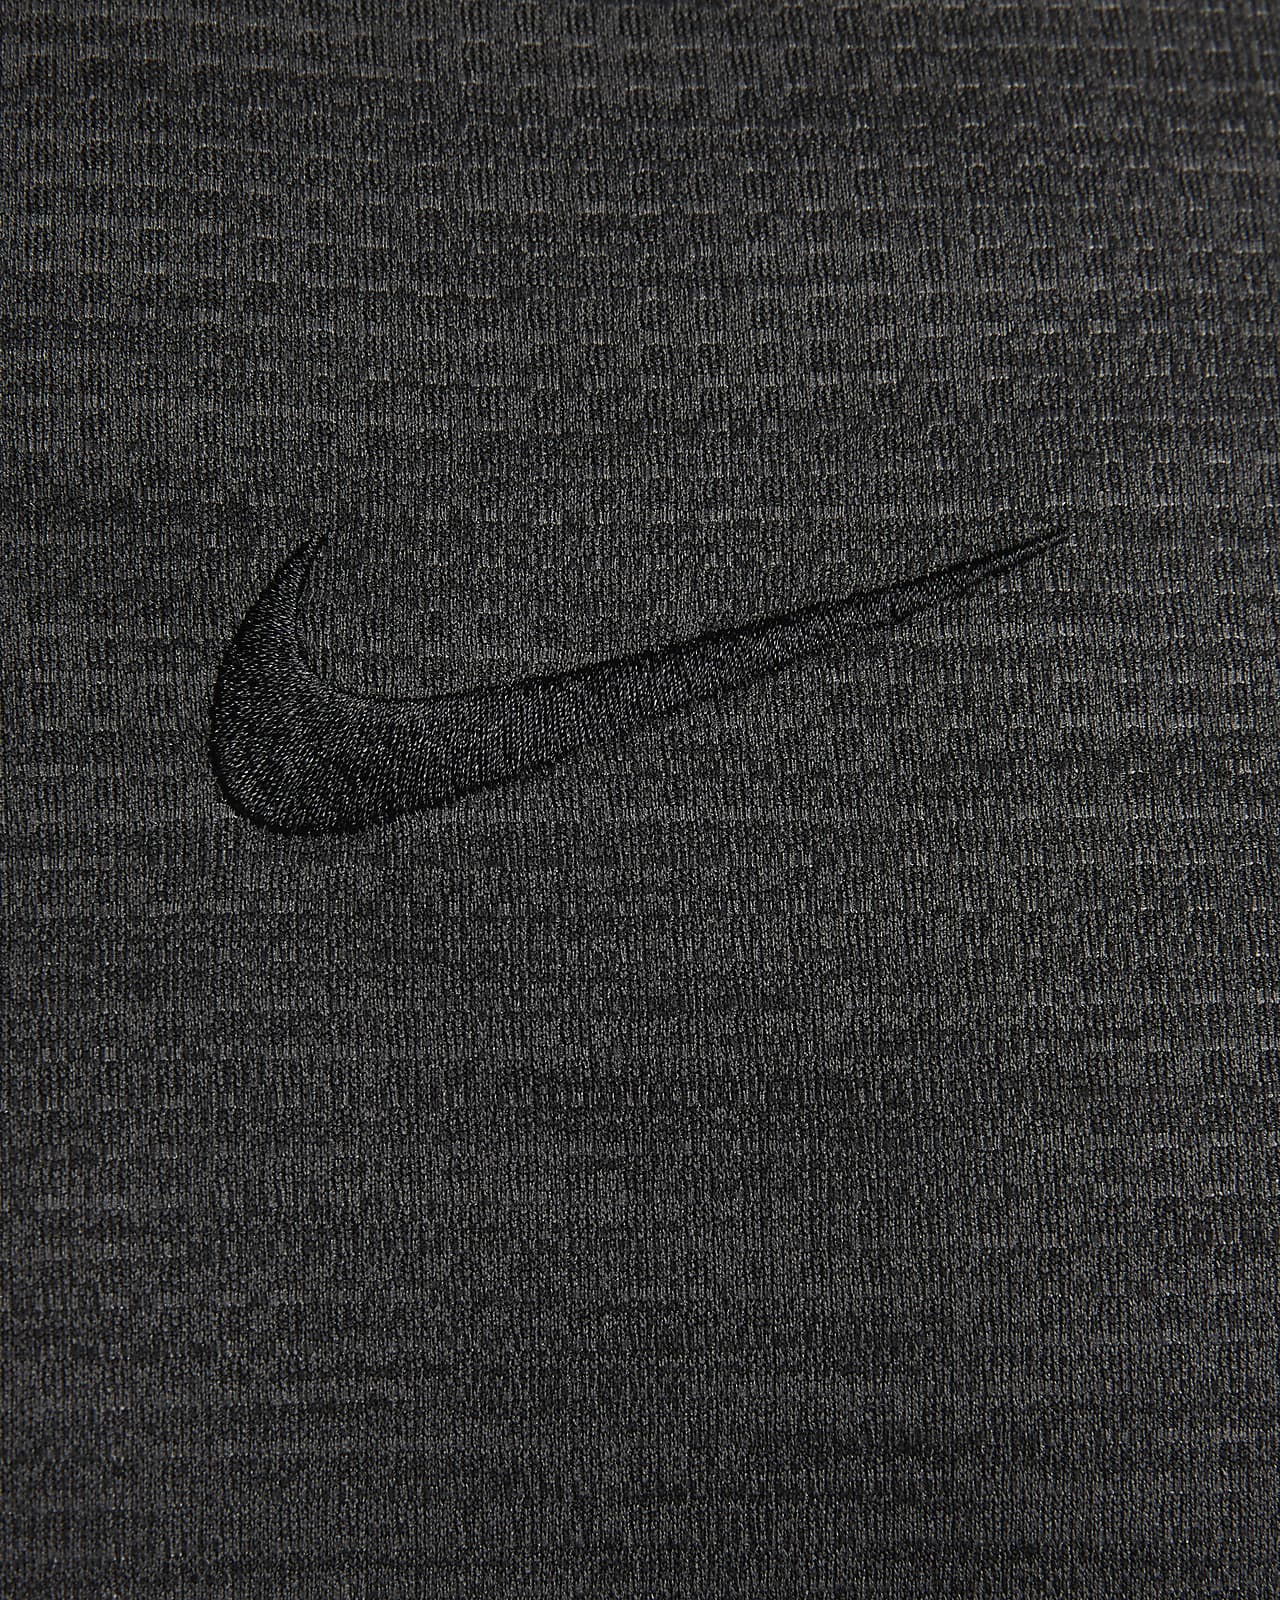 Nike Soccer Academy Dri-FIT long sleeve top in black